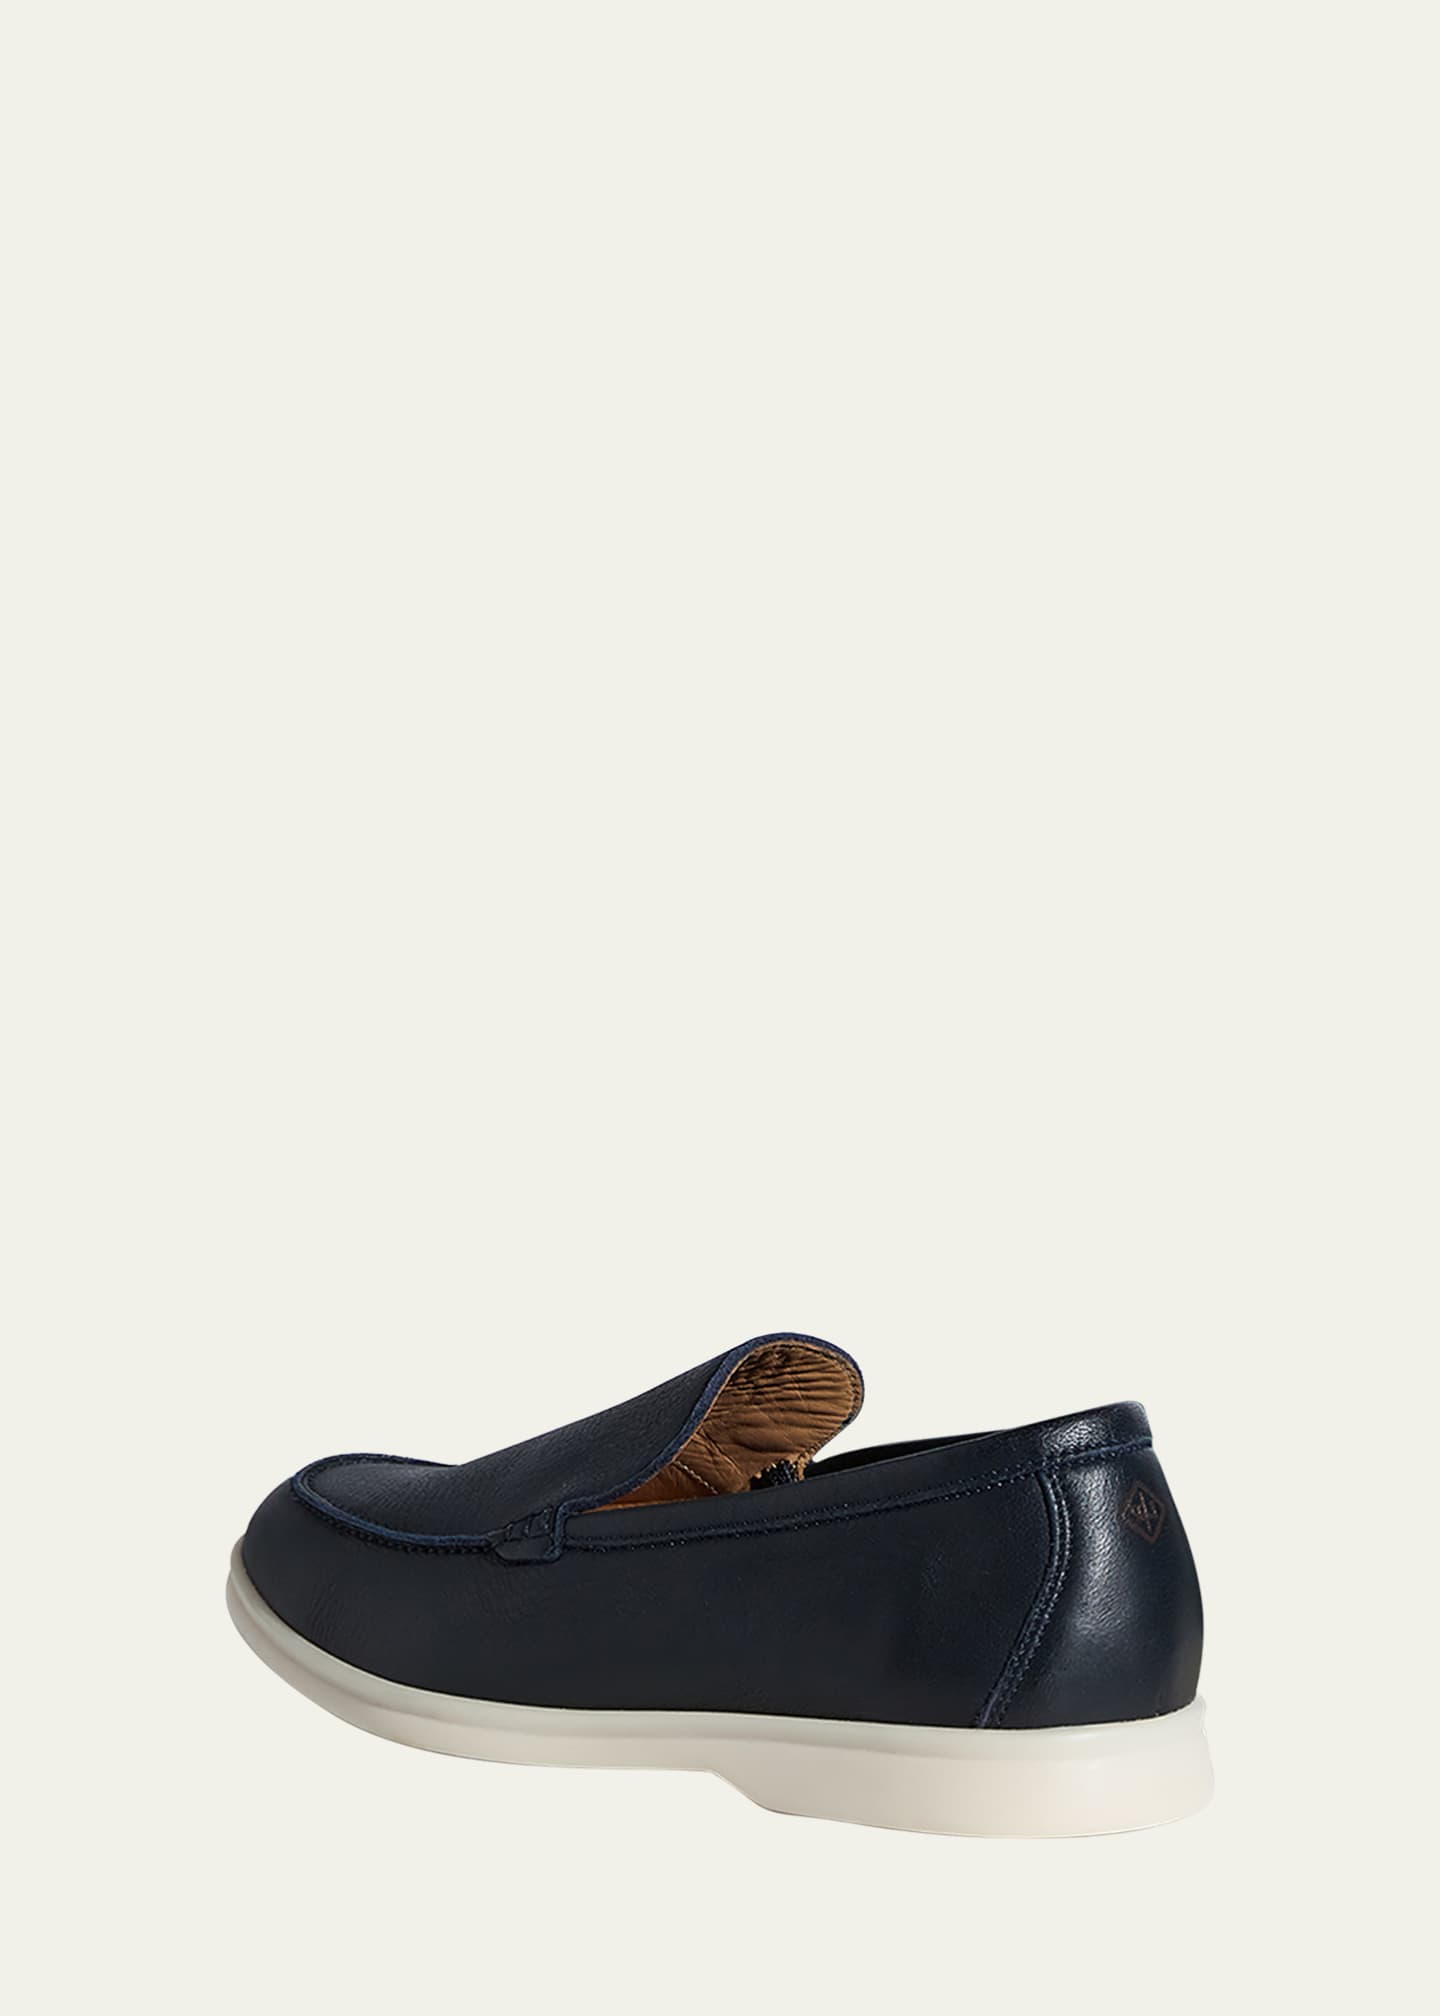 Loro Piana Summer Walk Black Loafers New Size 42.5 US 9.5